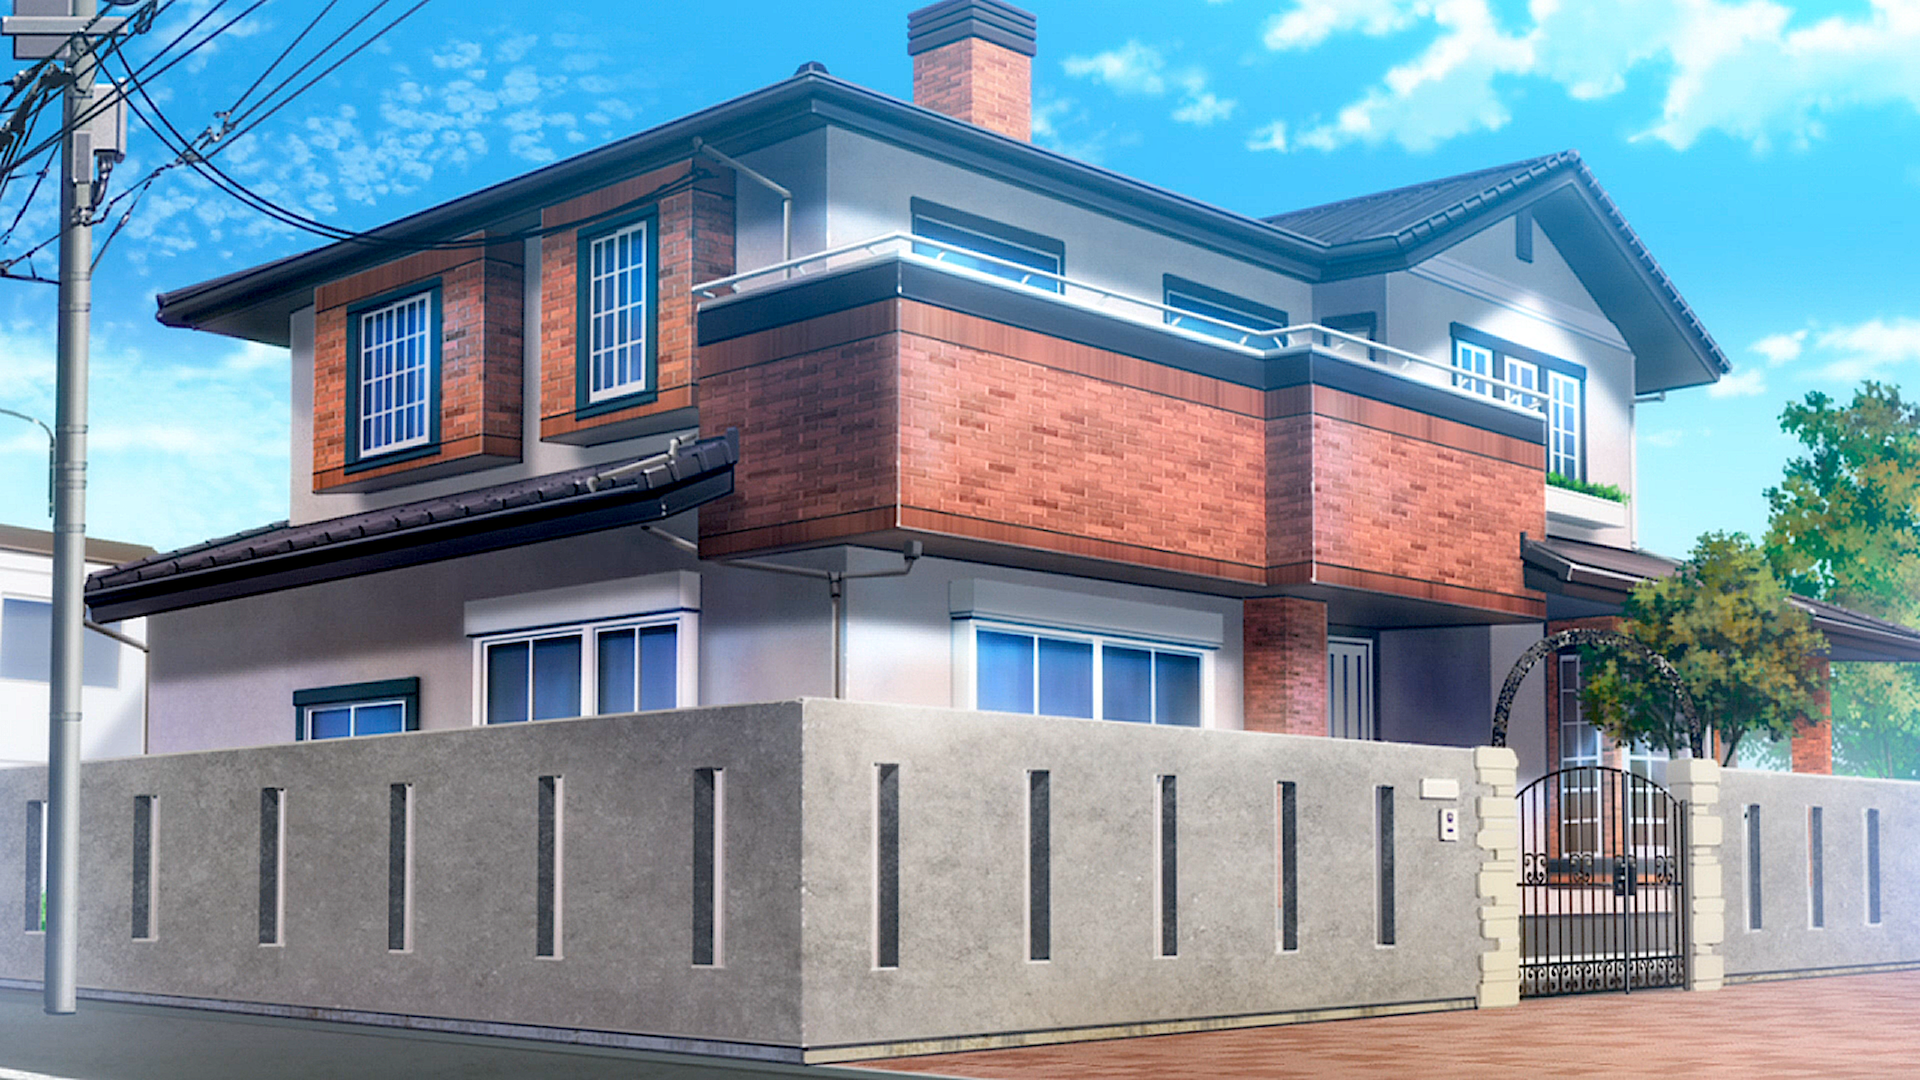 Momokino Residence HD Wallpaper Background Image